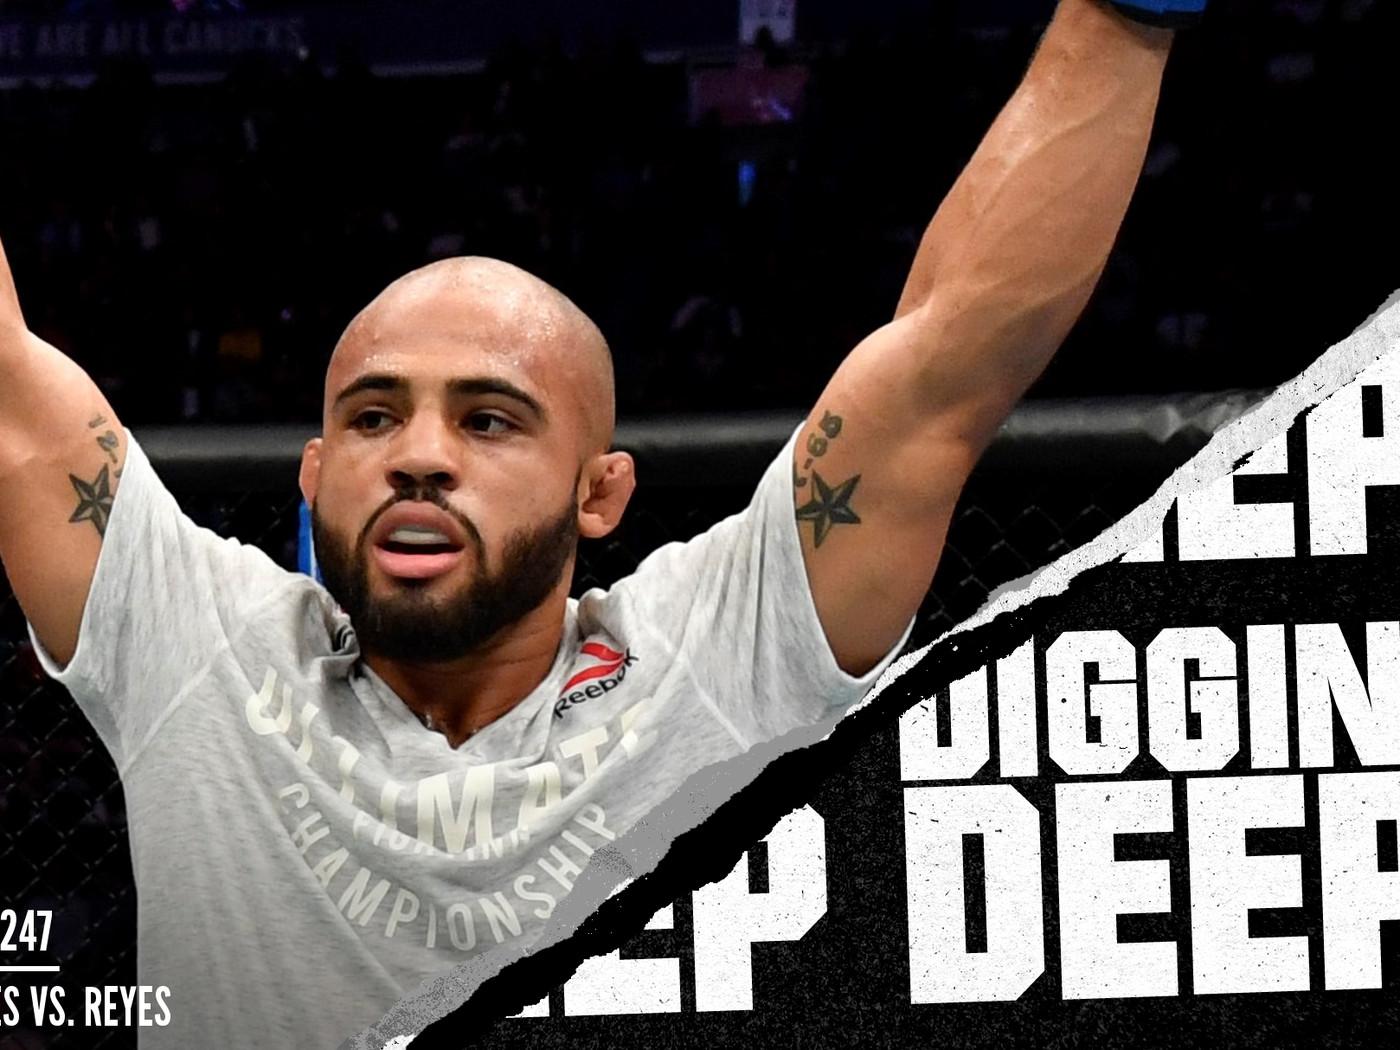 Diggin' Deep on UFC 247: Jones vs. Reyes prelims preview